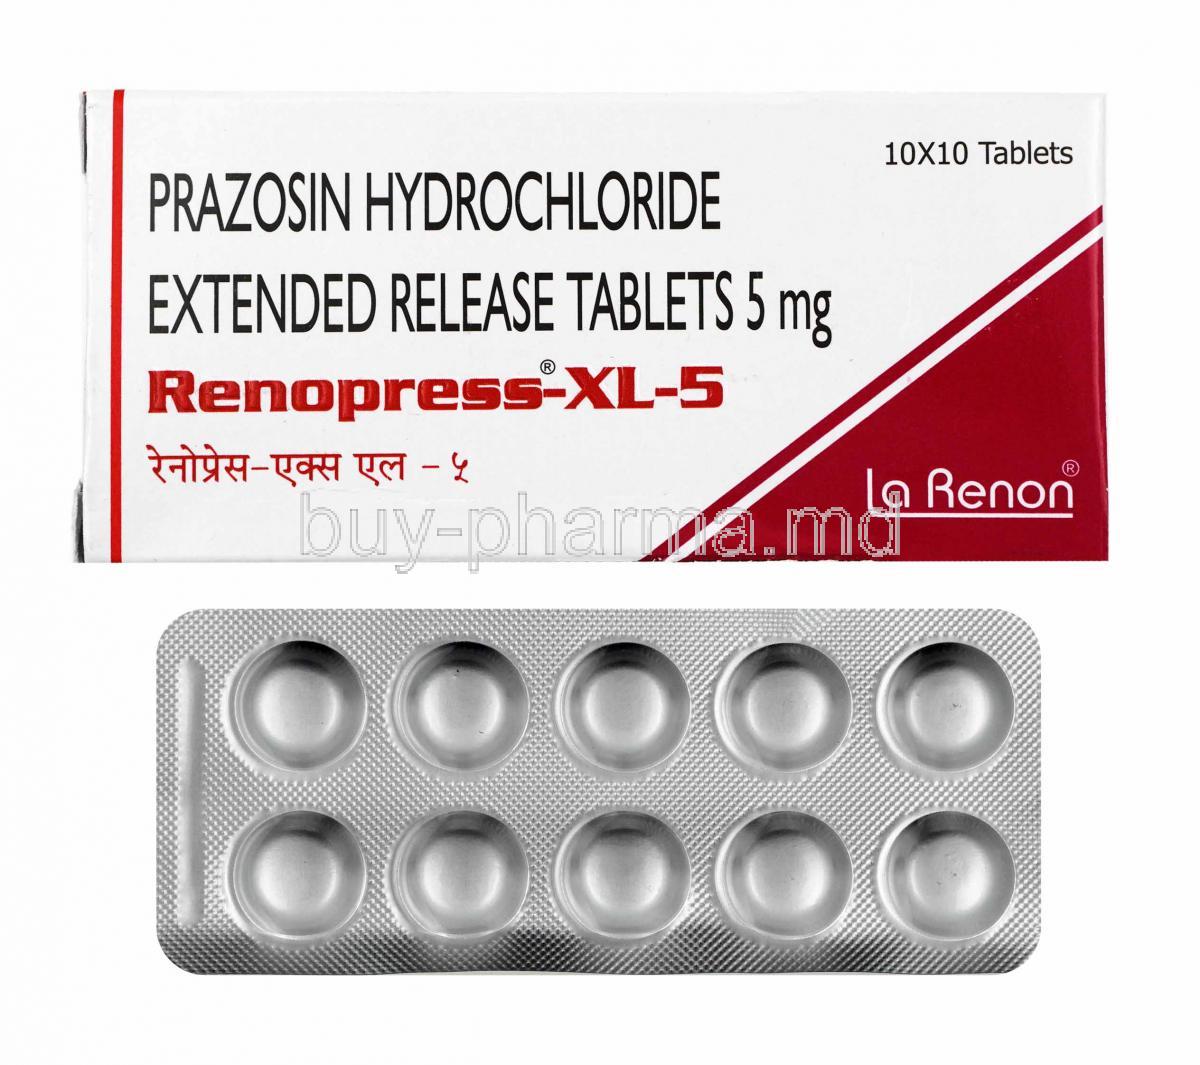 Renopress-XL, Prazosin box and tablets